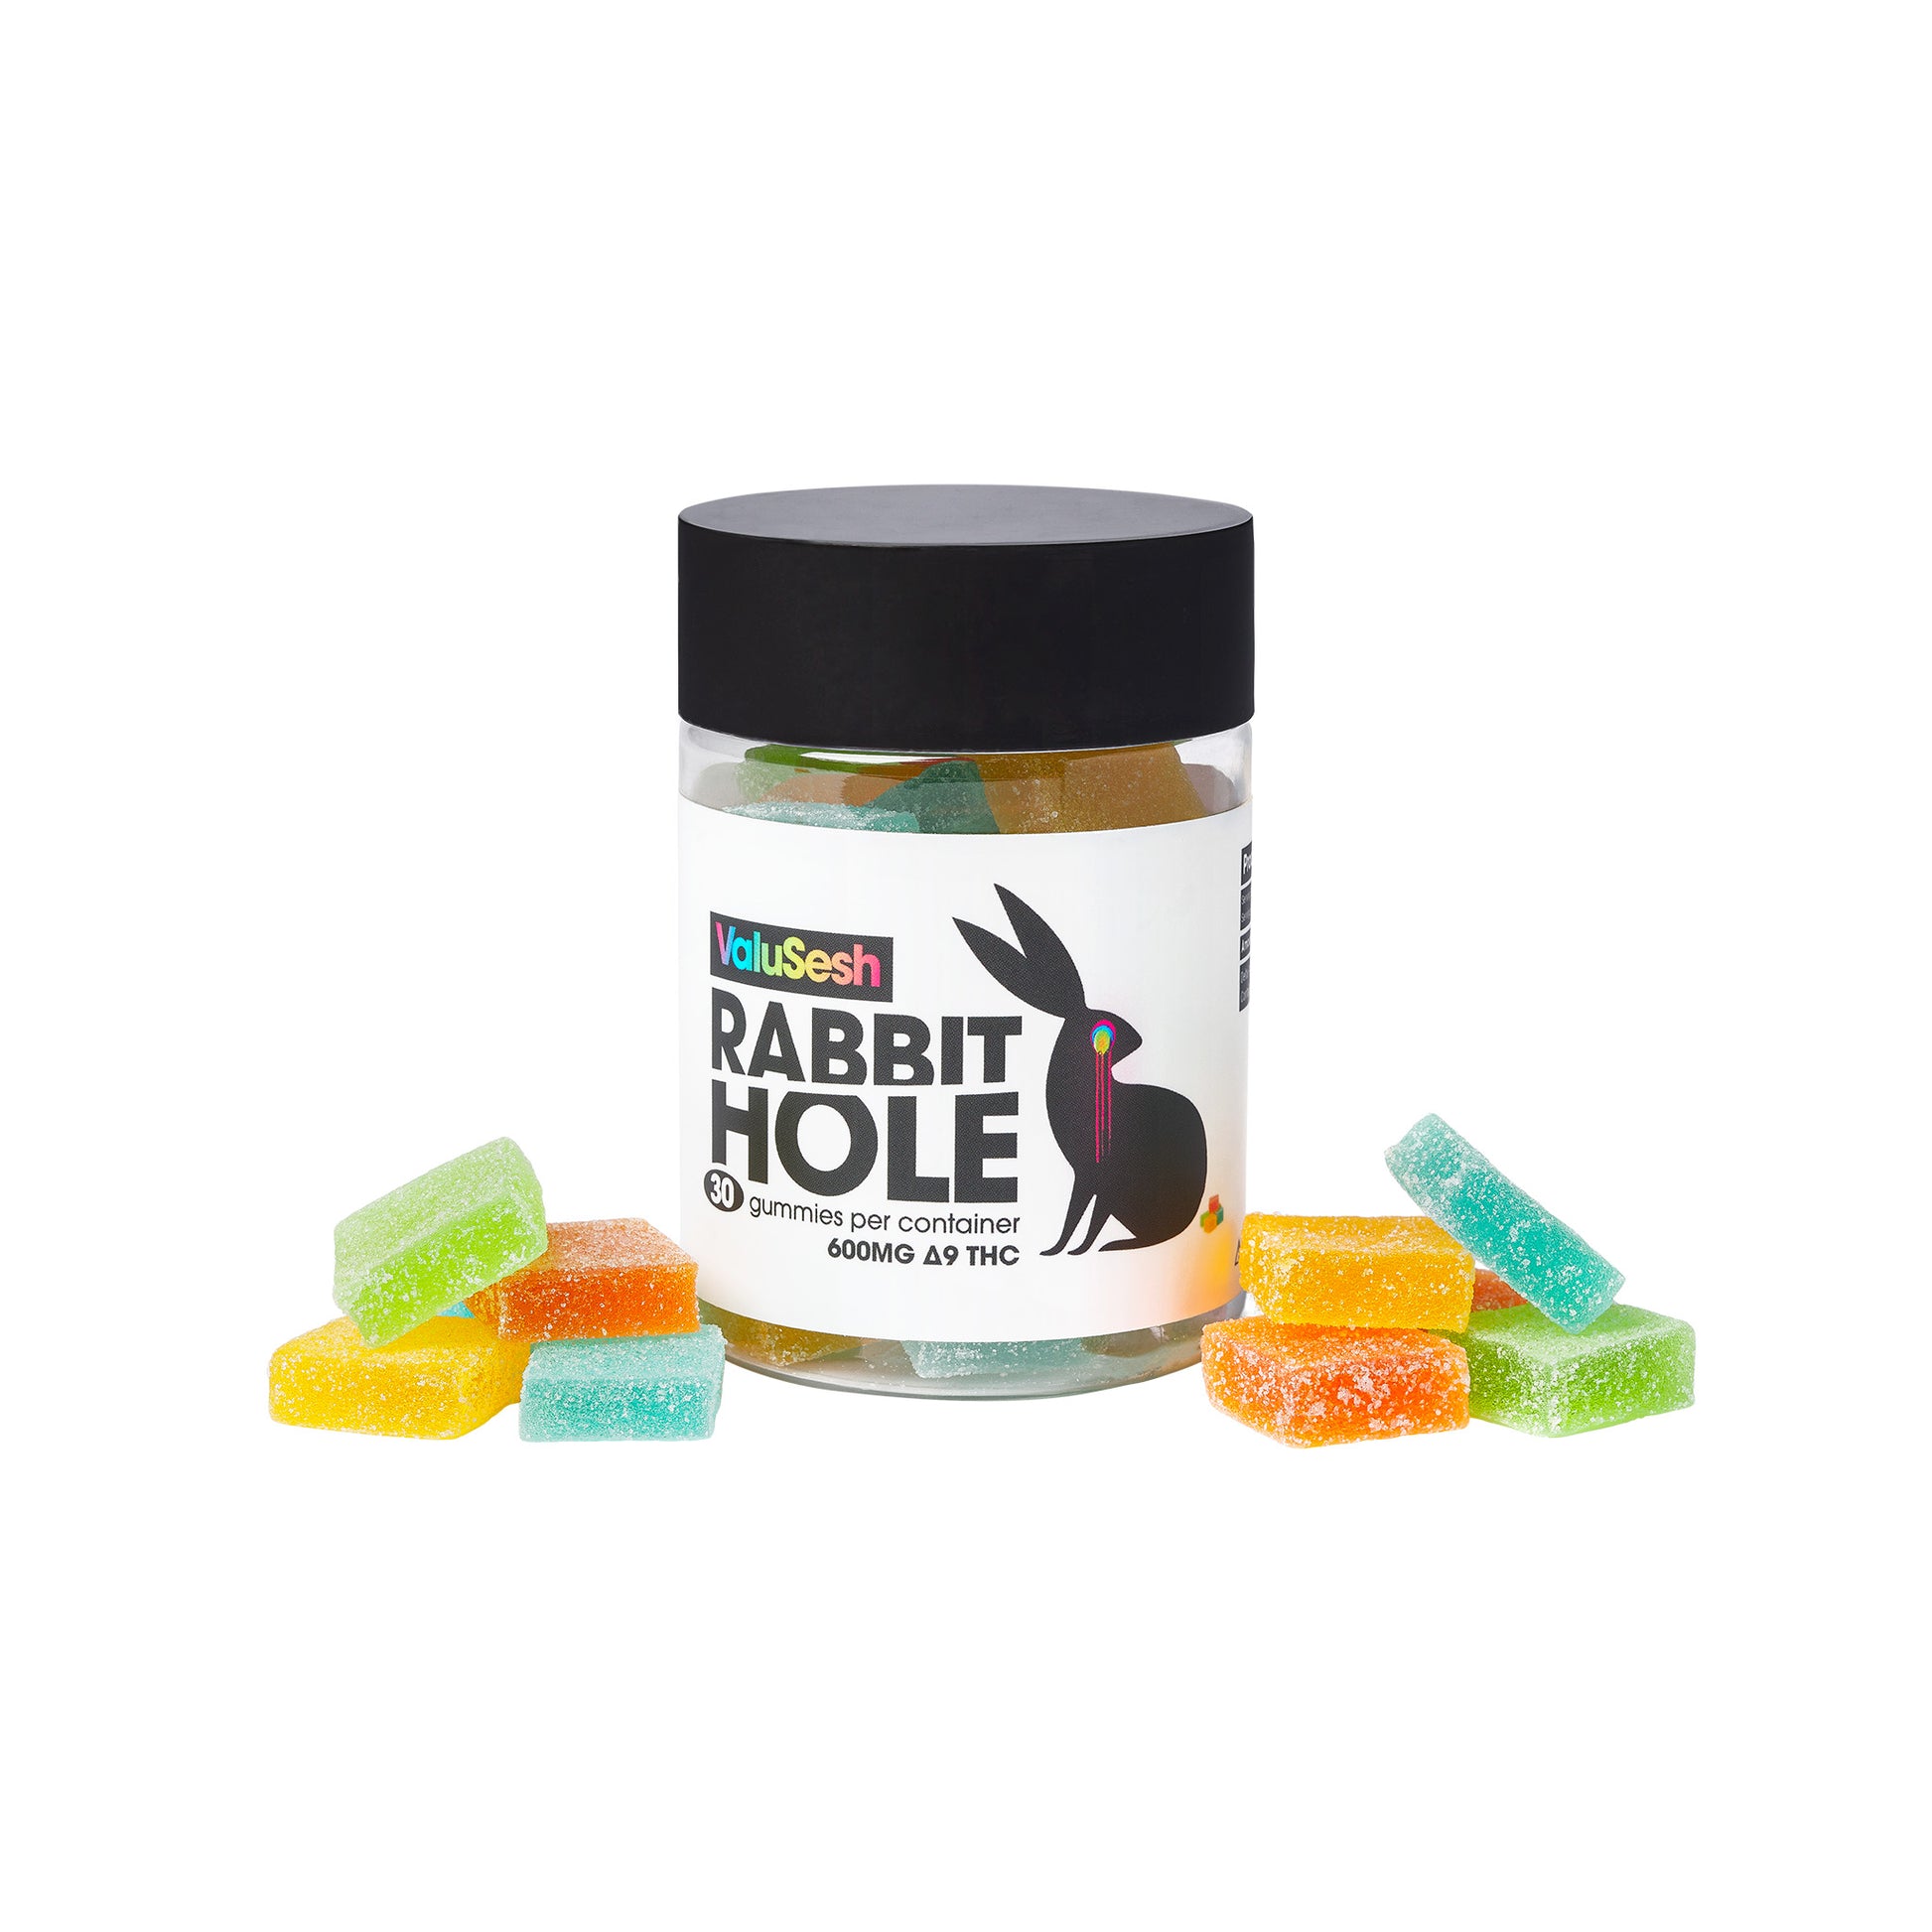 Rabbit Hole Delta 9 Gummies from ValuSesh